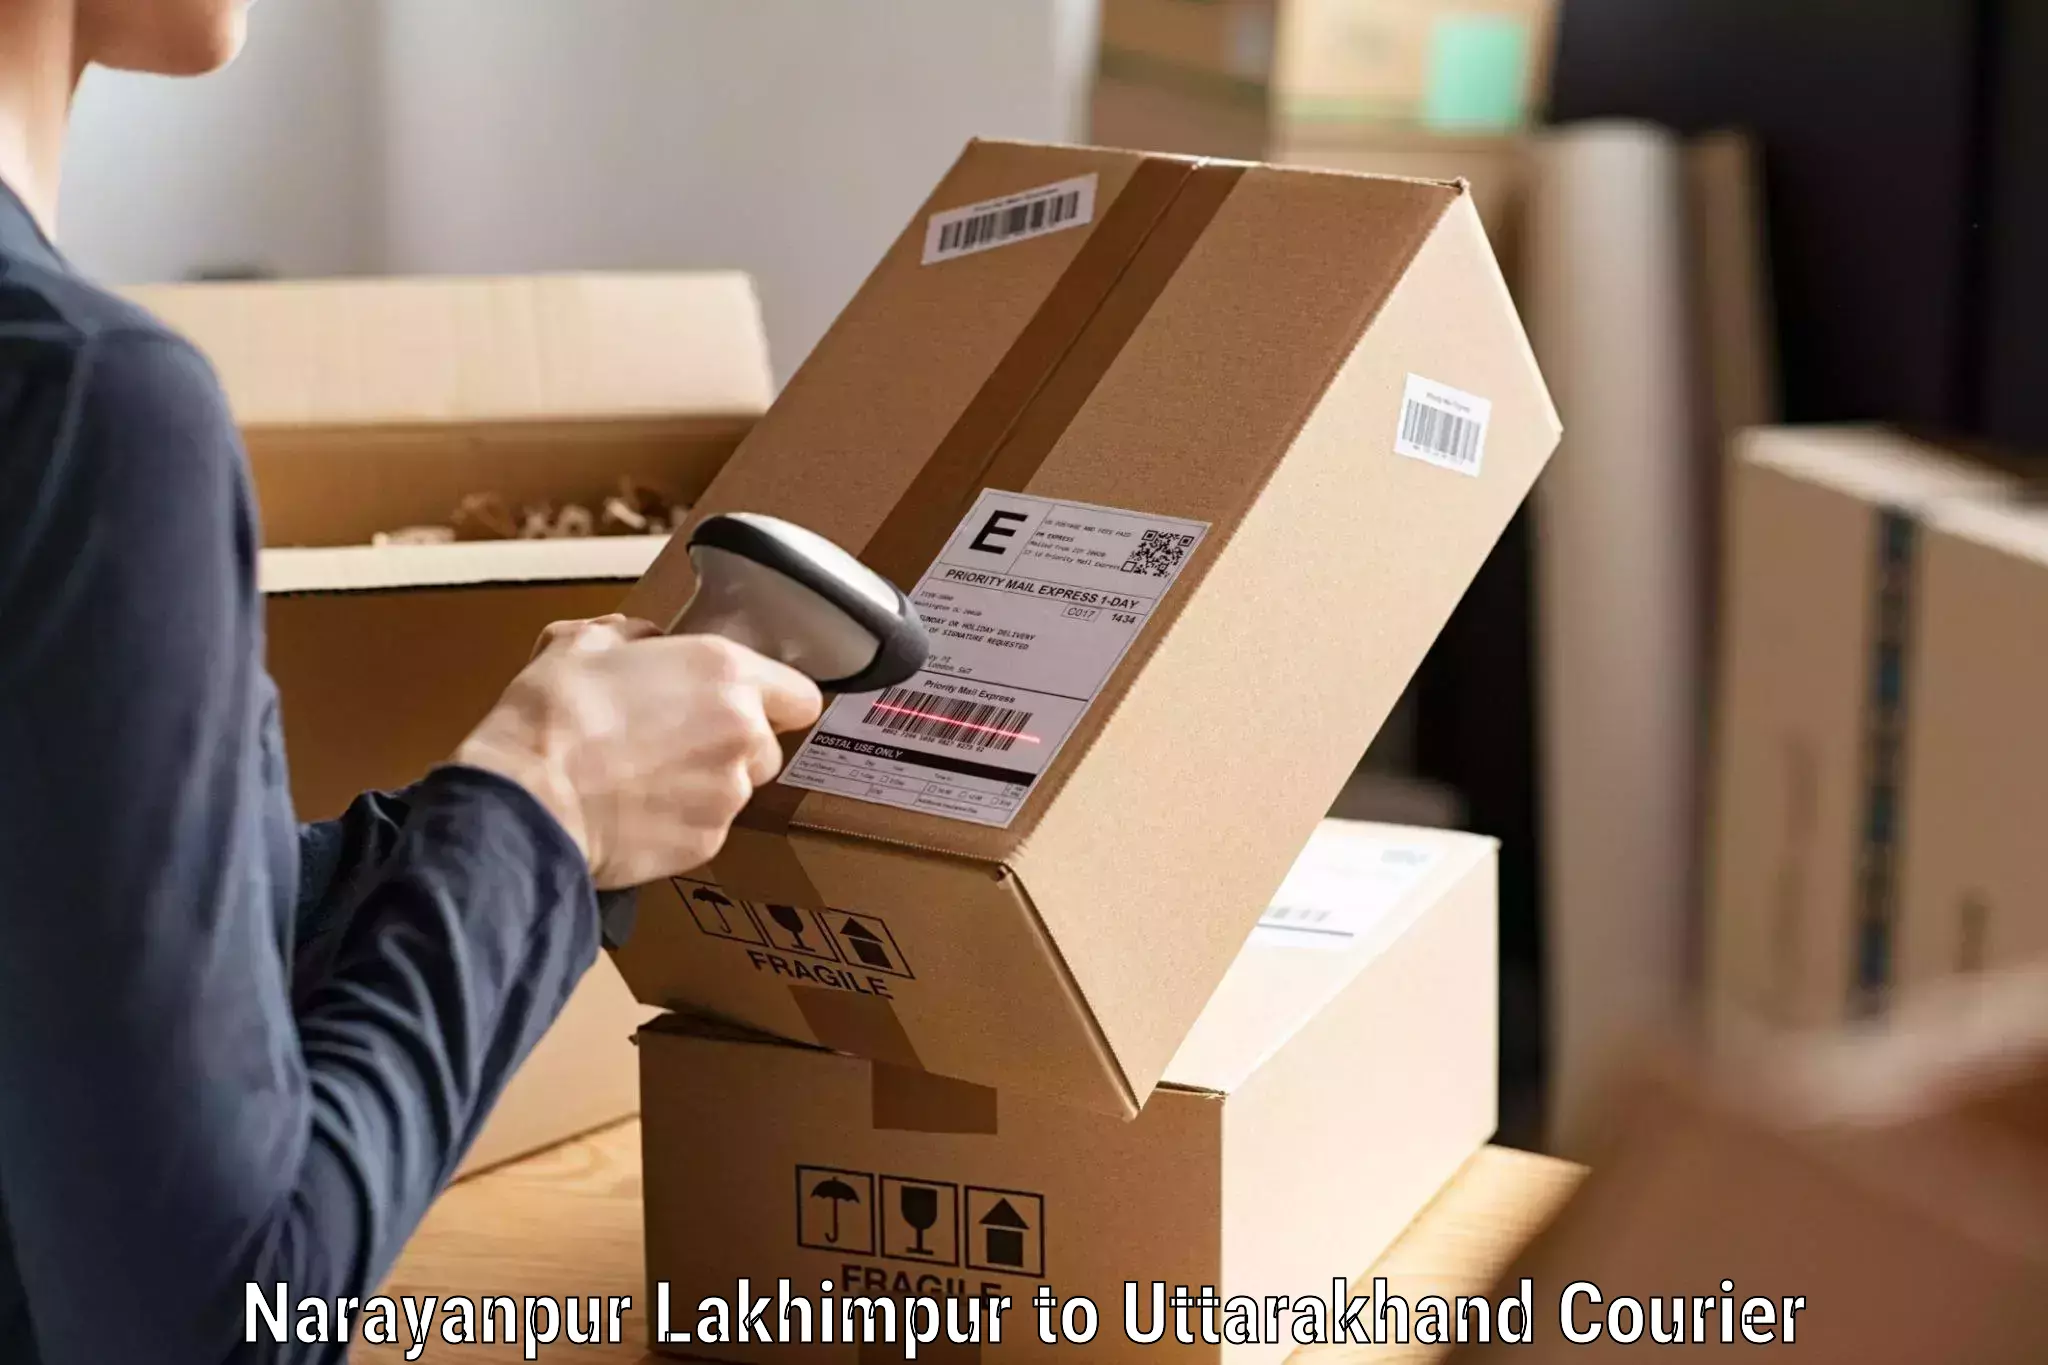 Efficient parcel service Narayanpur Lakhimpur to Pauri Garhwal